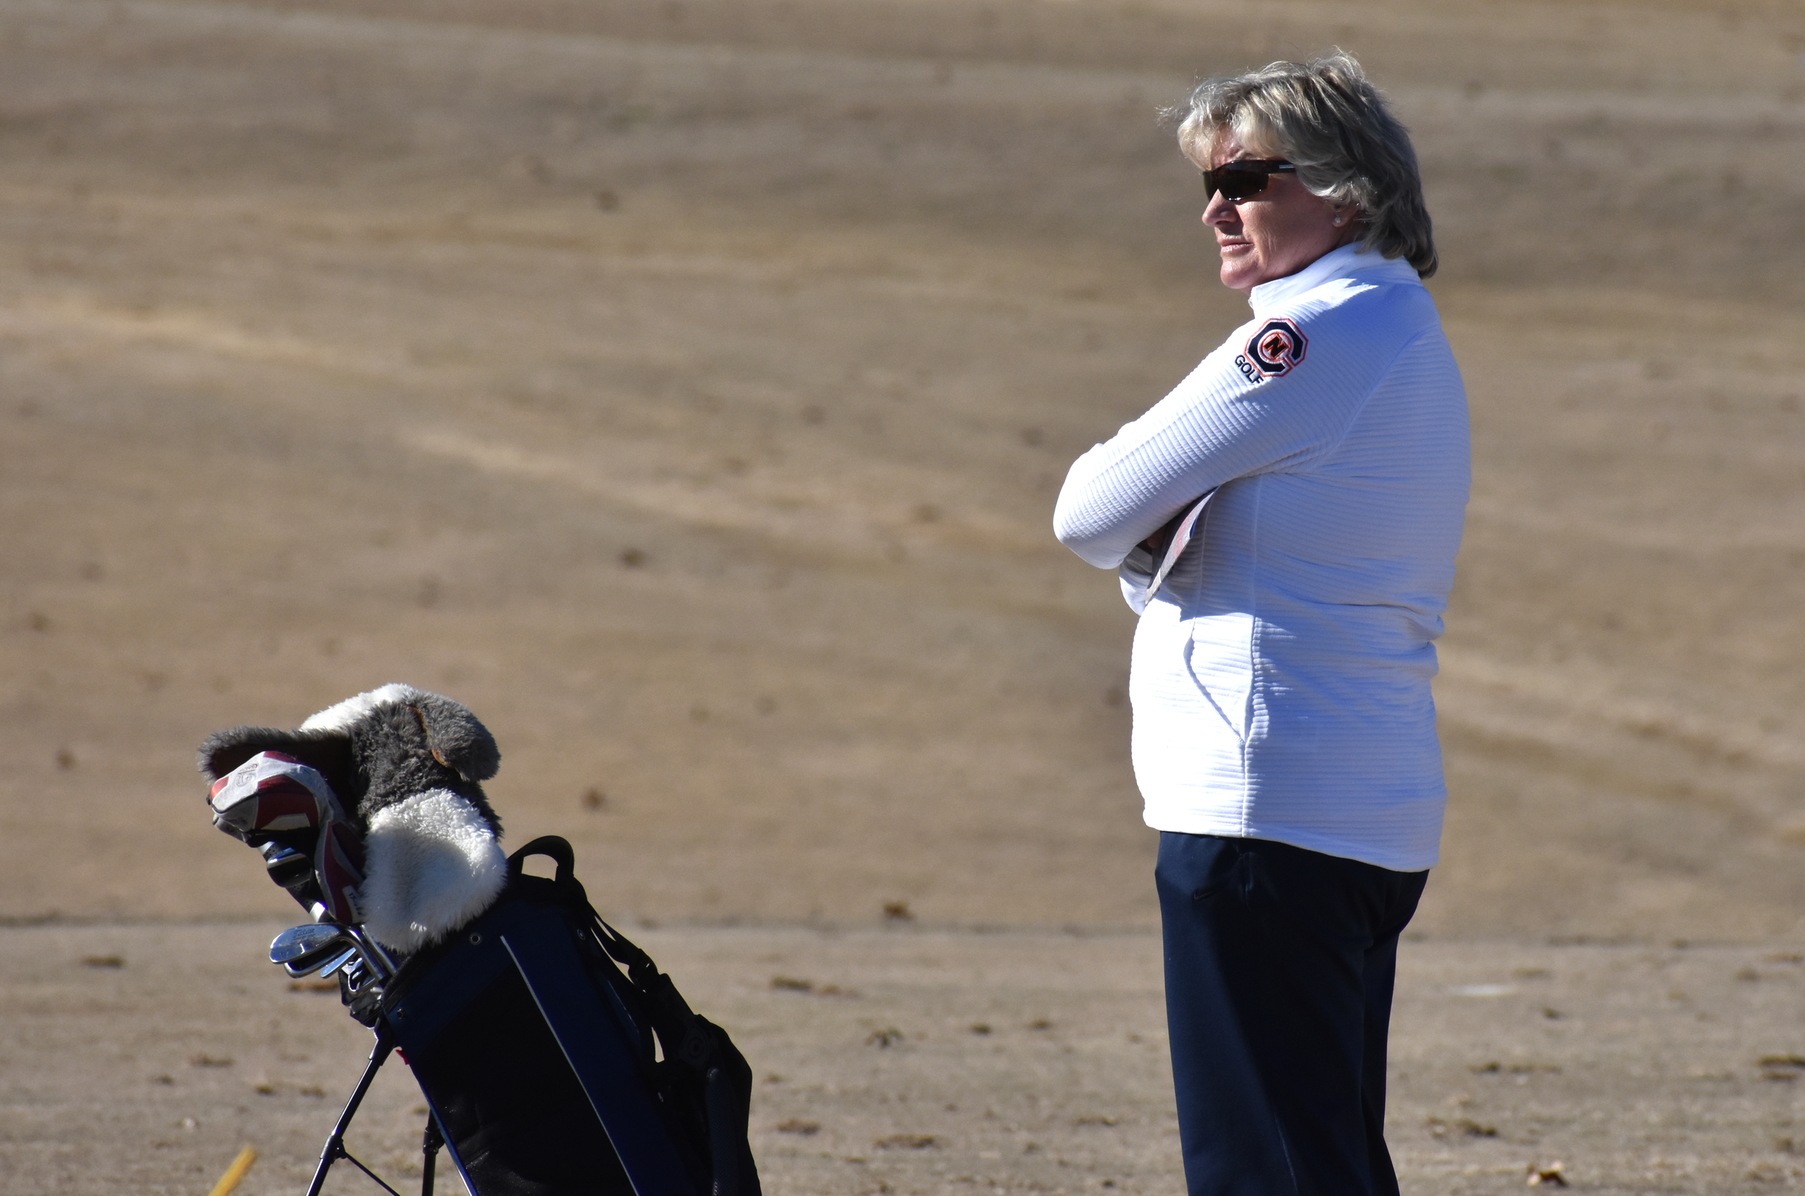 Strudwick wraps up Senior LPGA Championship sharing 36th